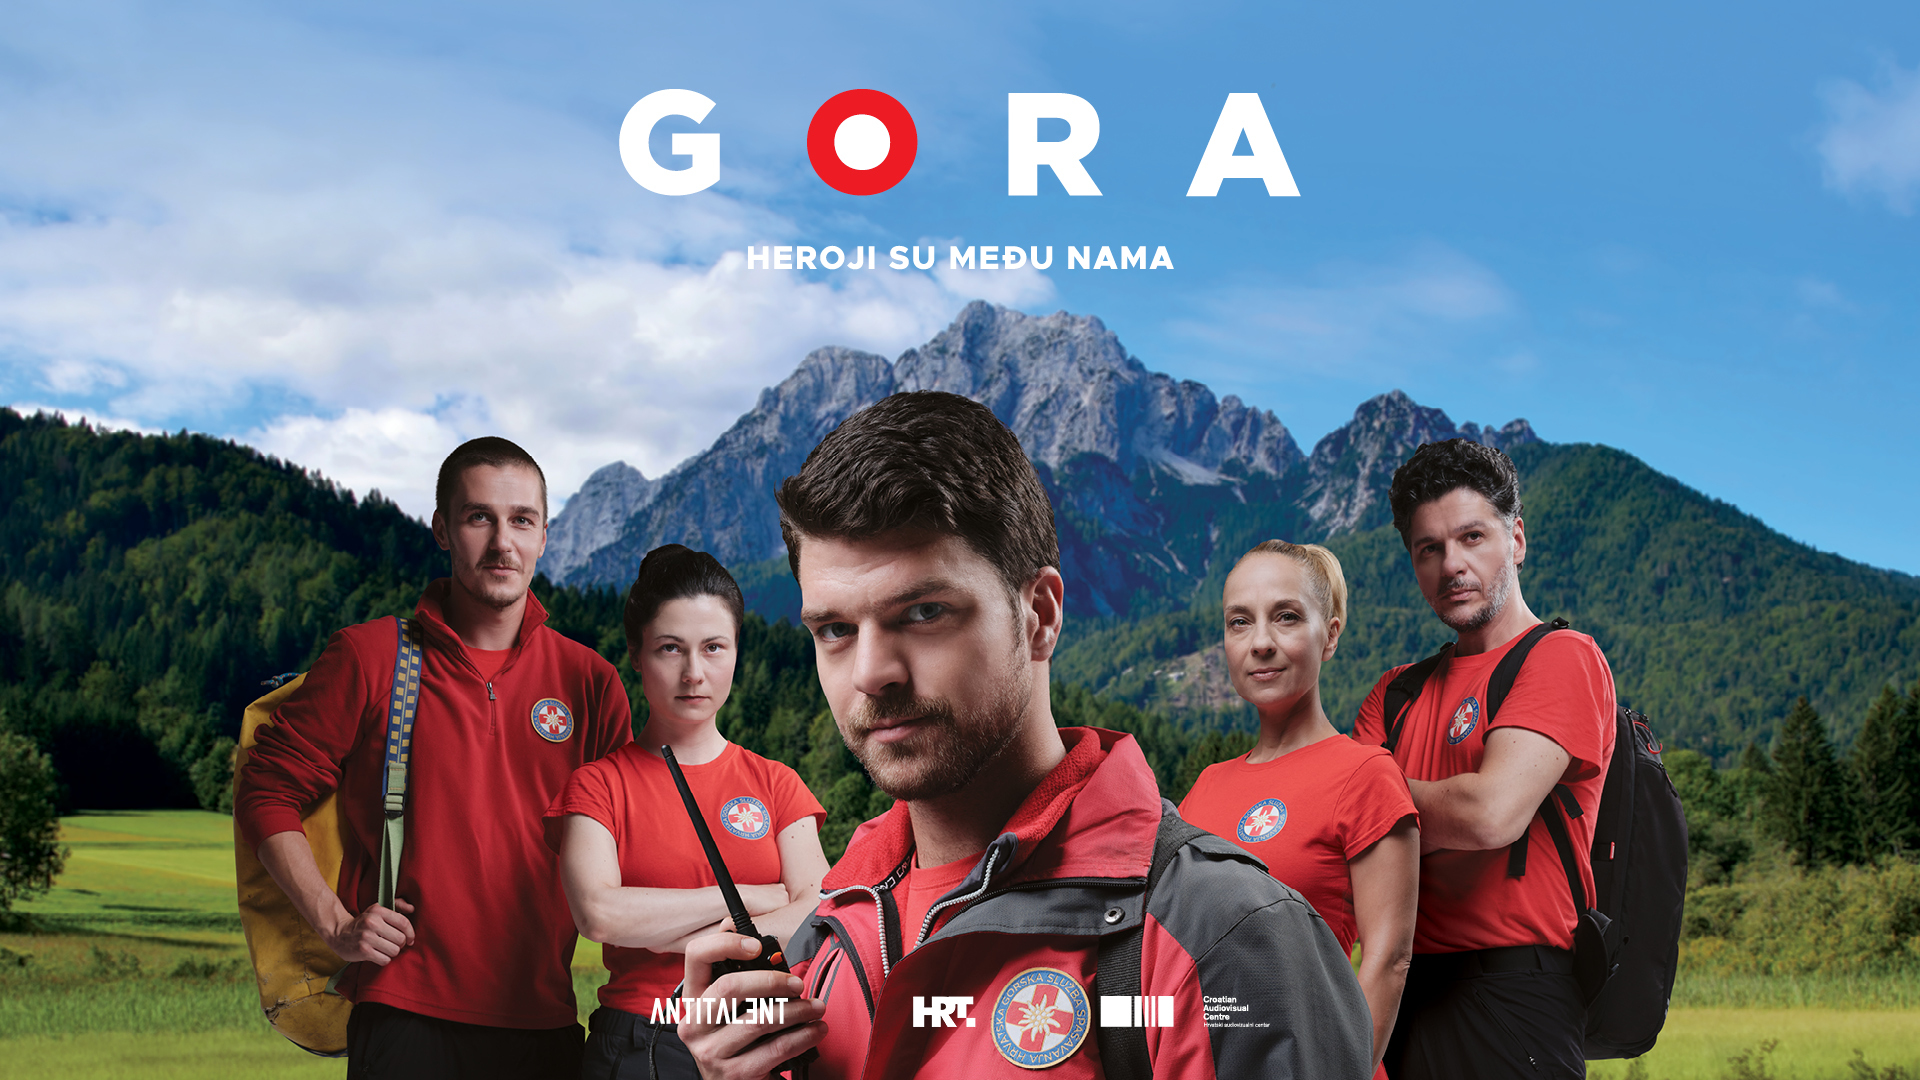 Hrvatska serija "Gora"